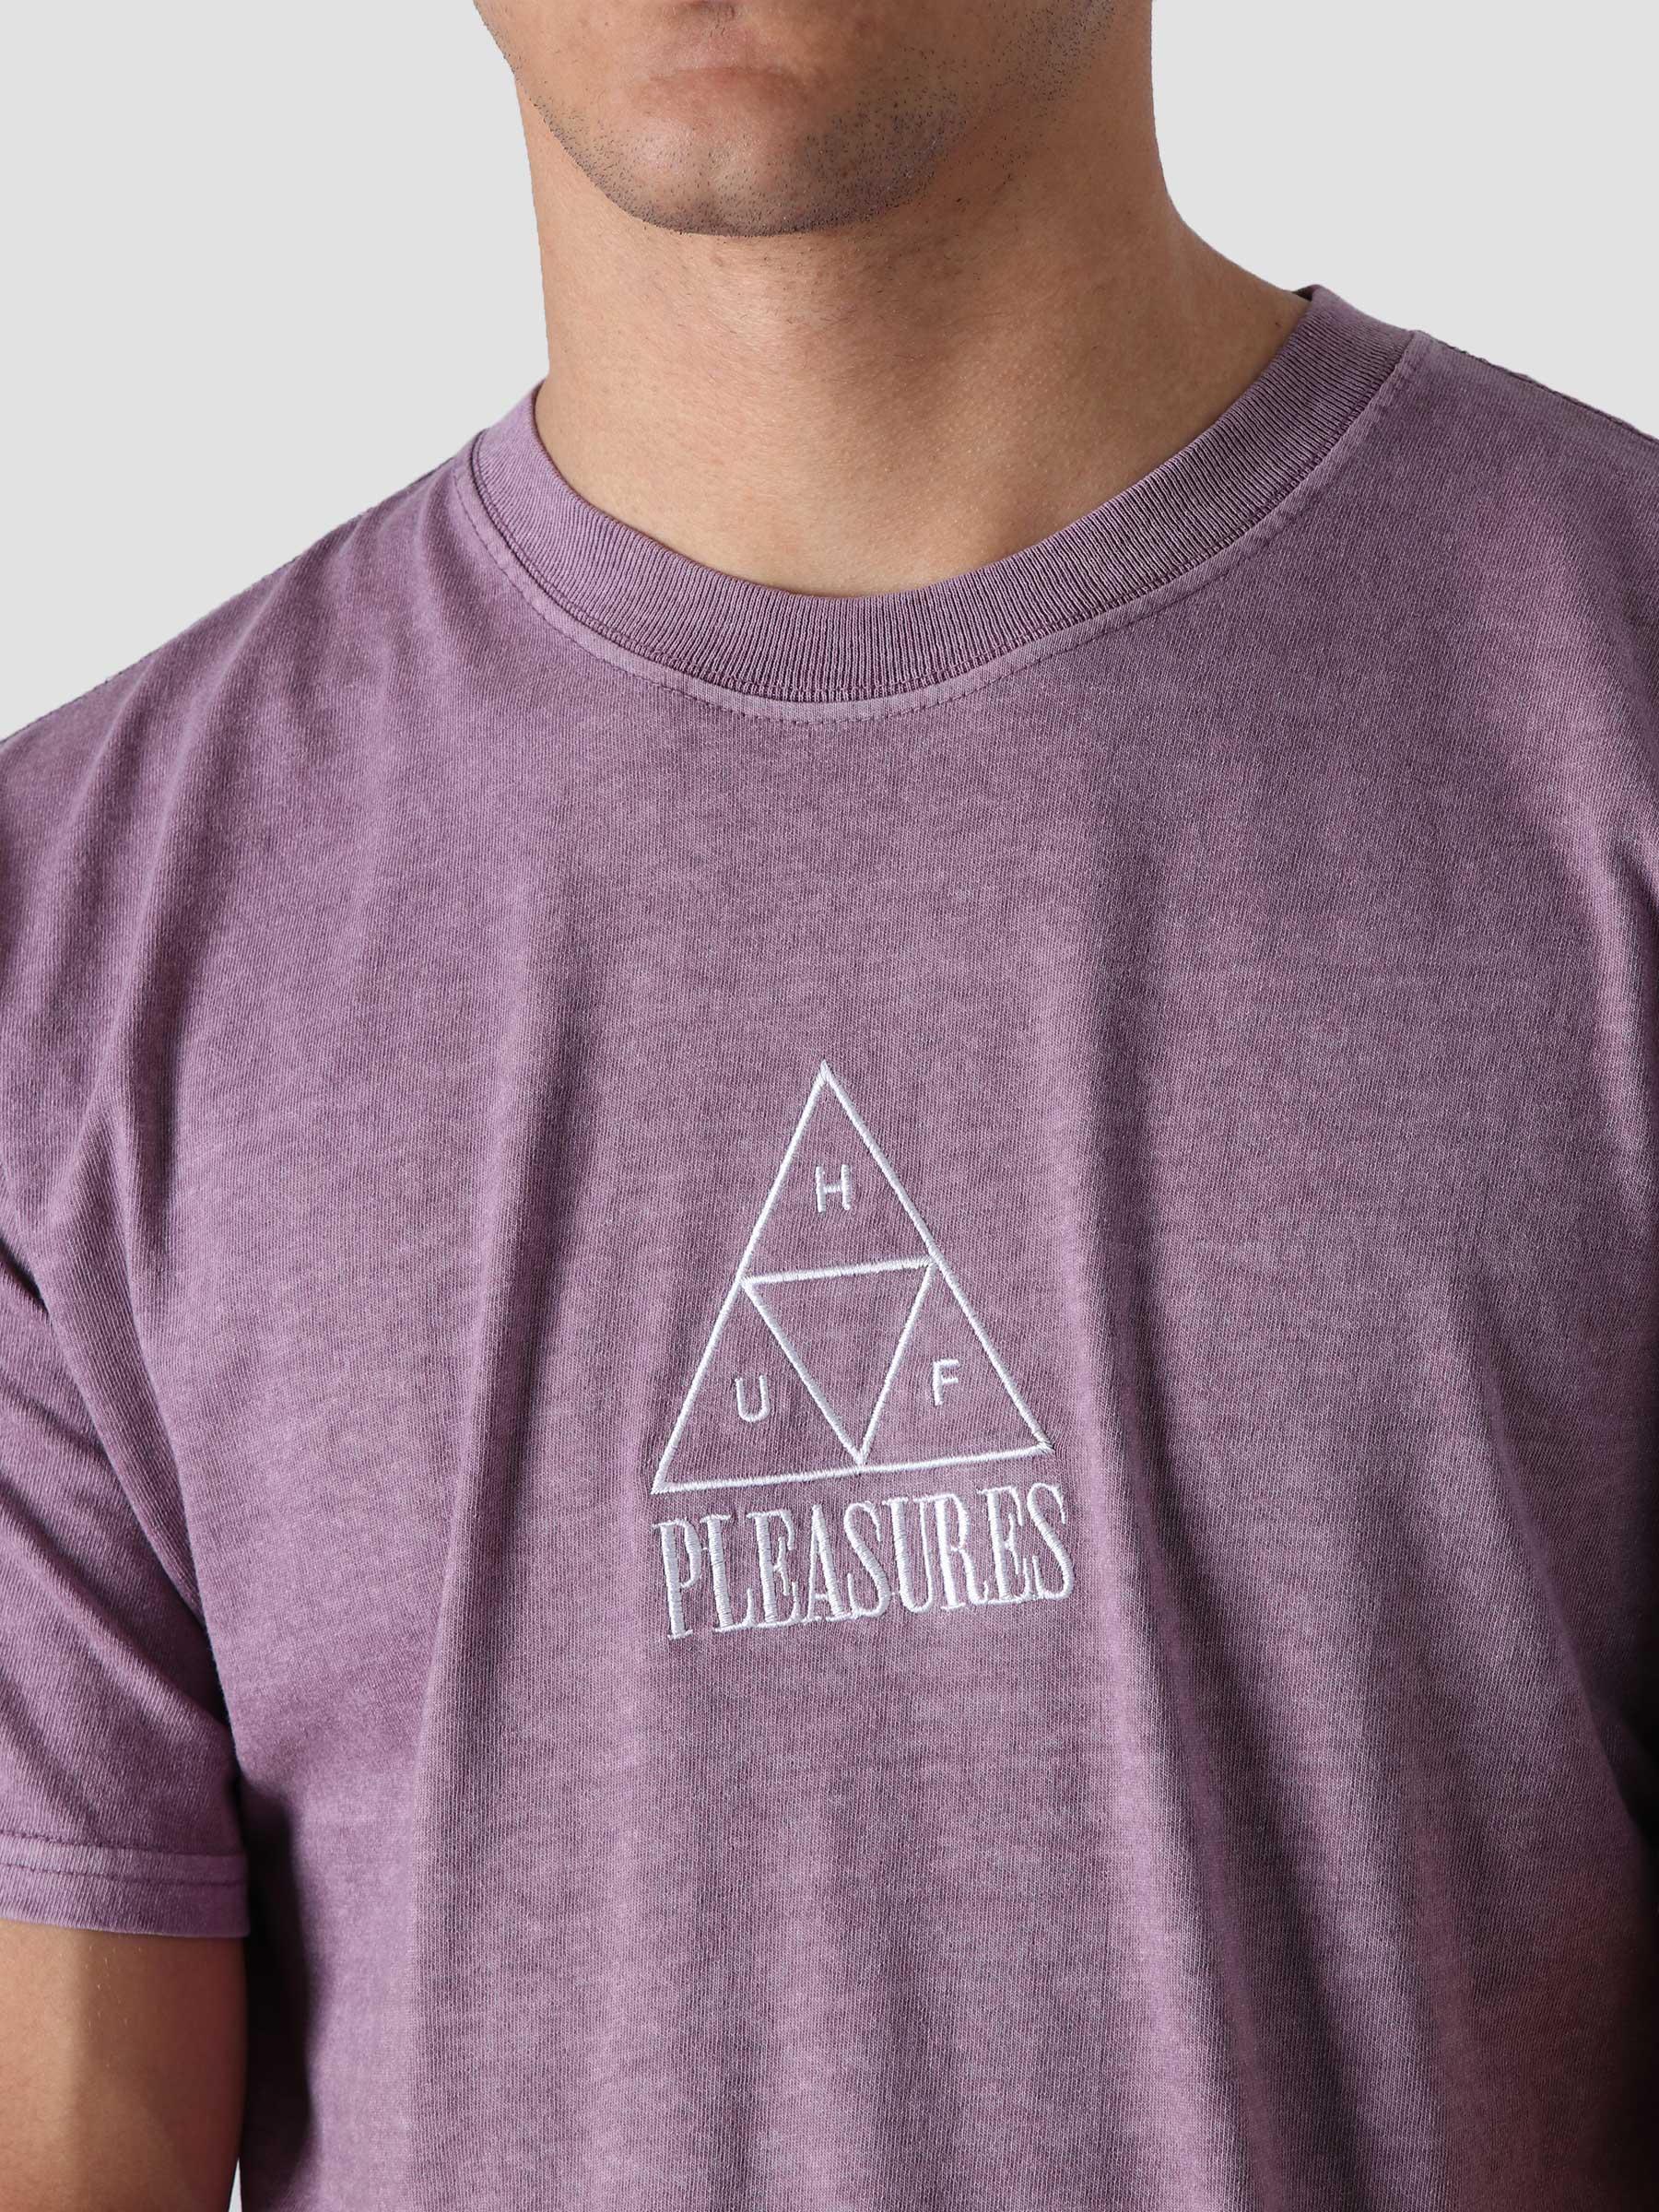 Huf X Pleasures Dyed S/S T-Shirt Purple TS01807